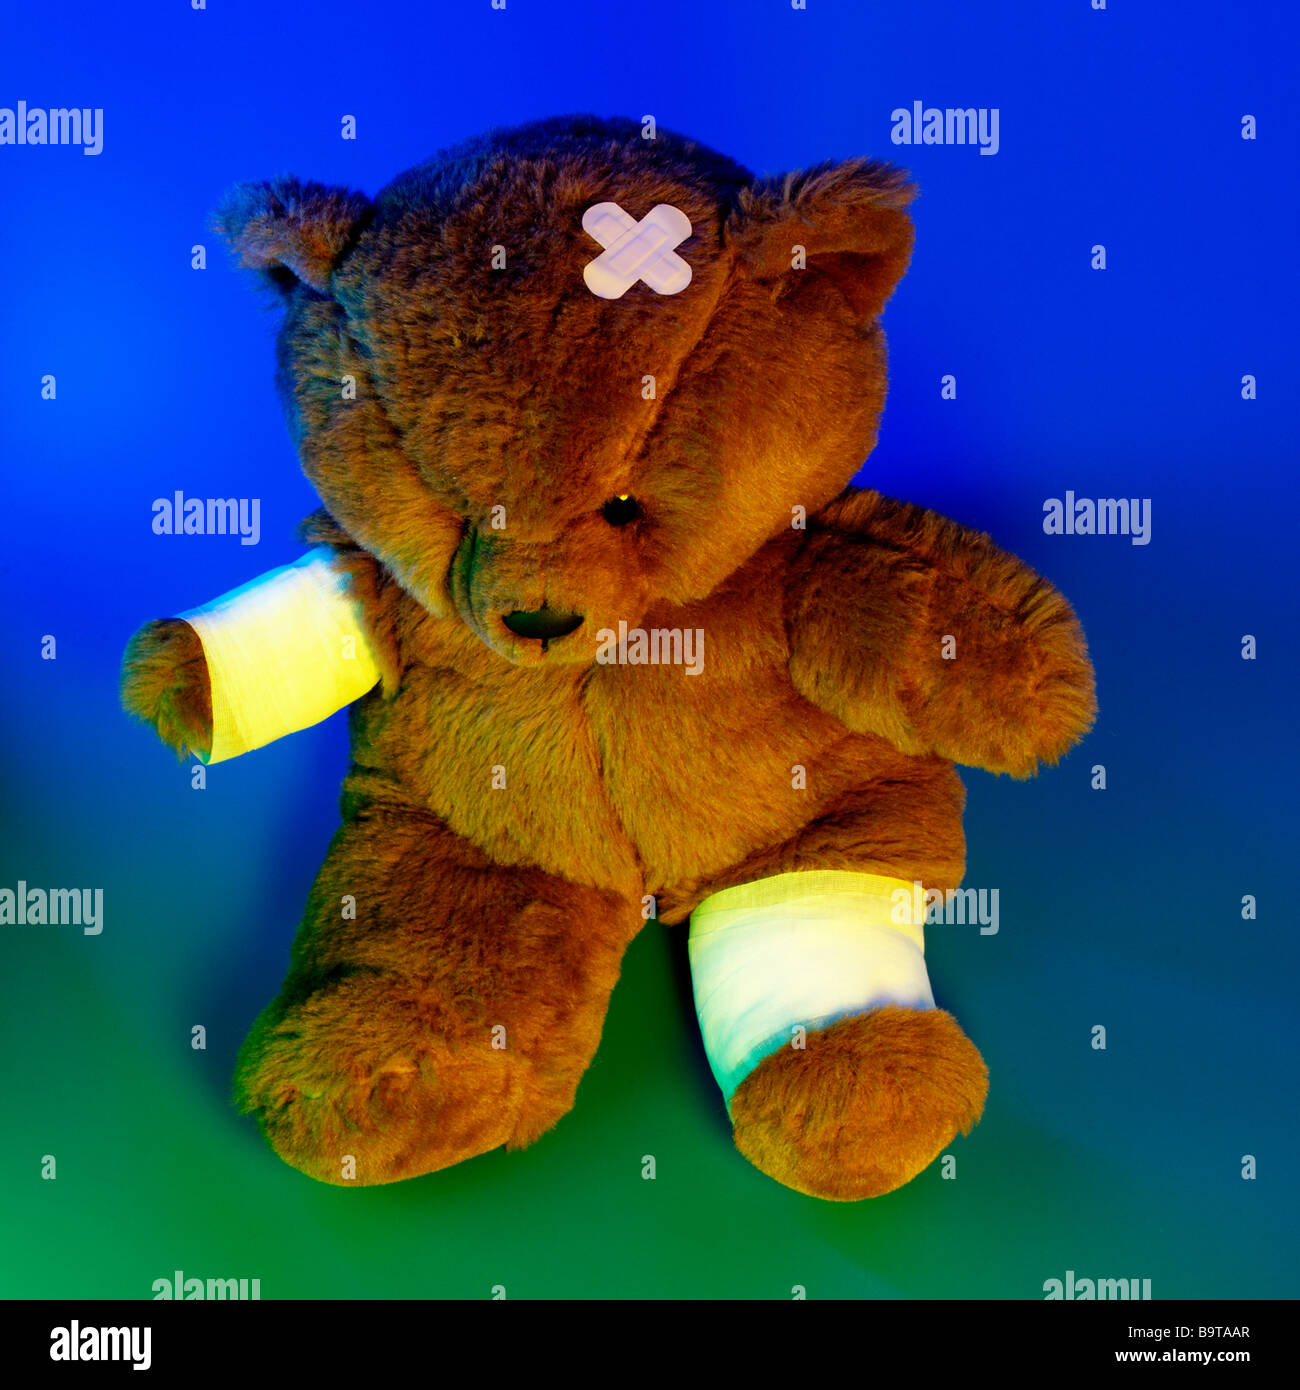 Injured teddy bear Stock Photo